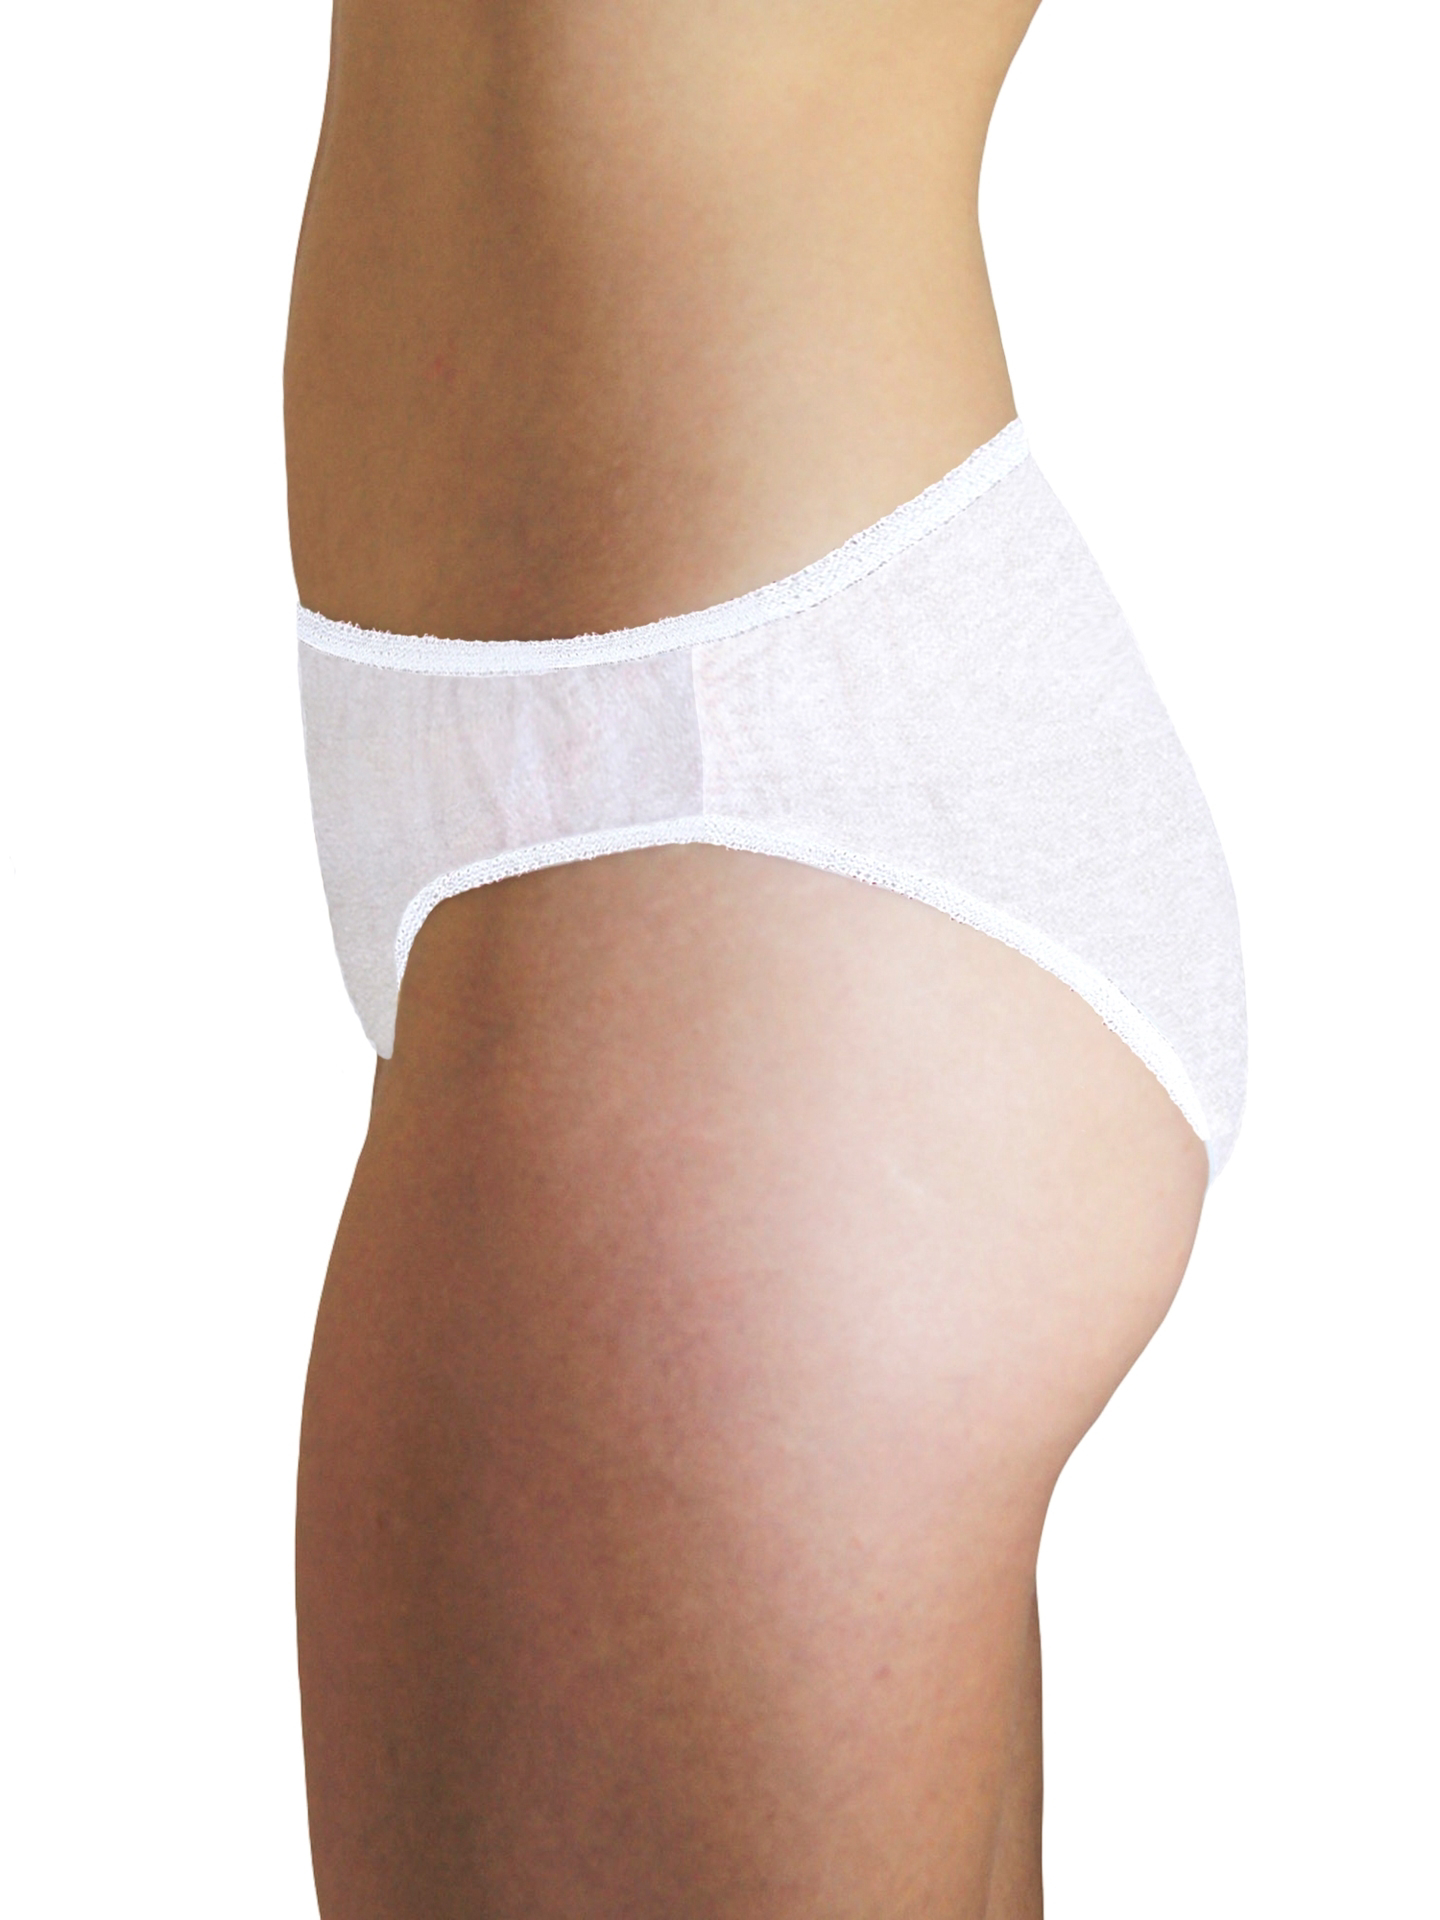 Disposable Thong Panties at Rs 15/piece